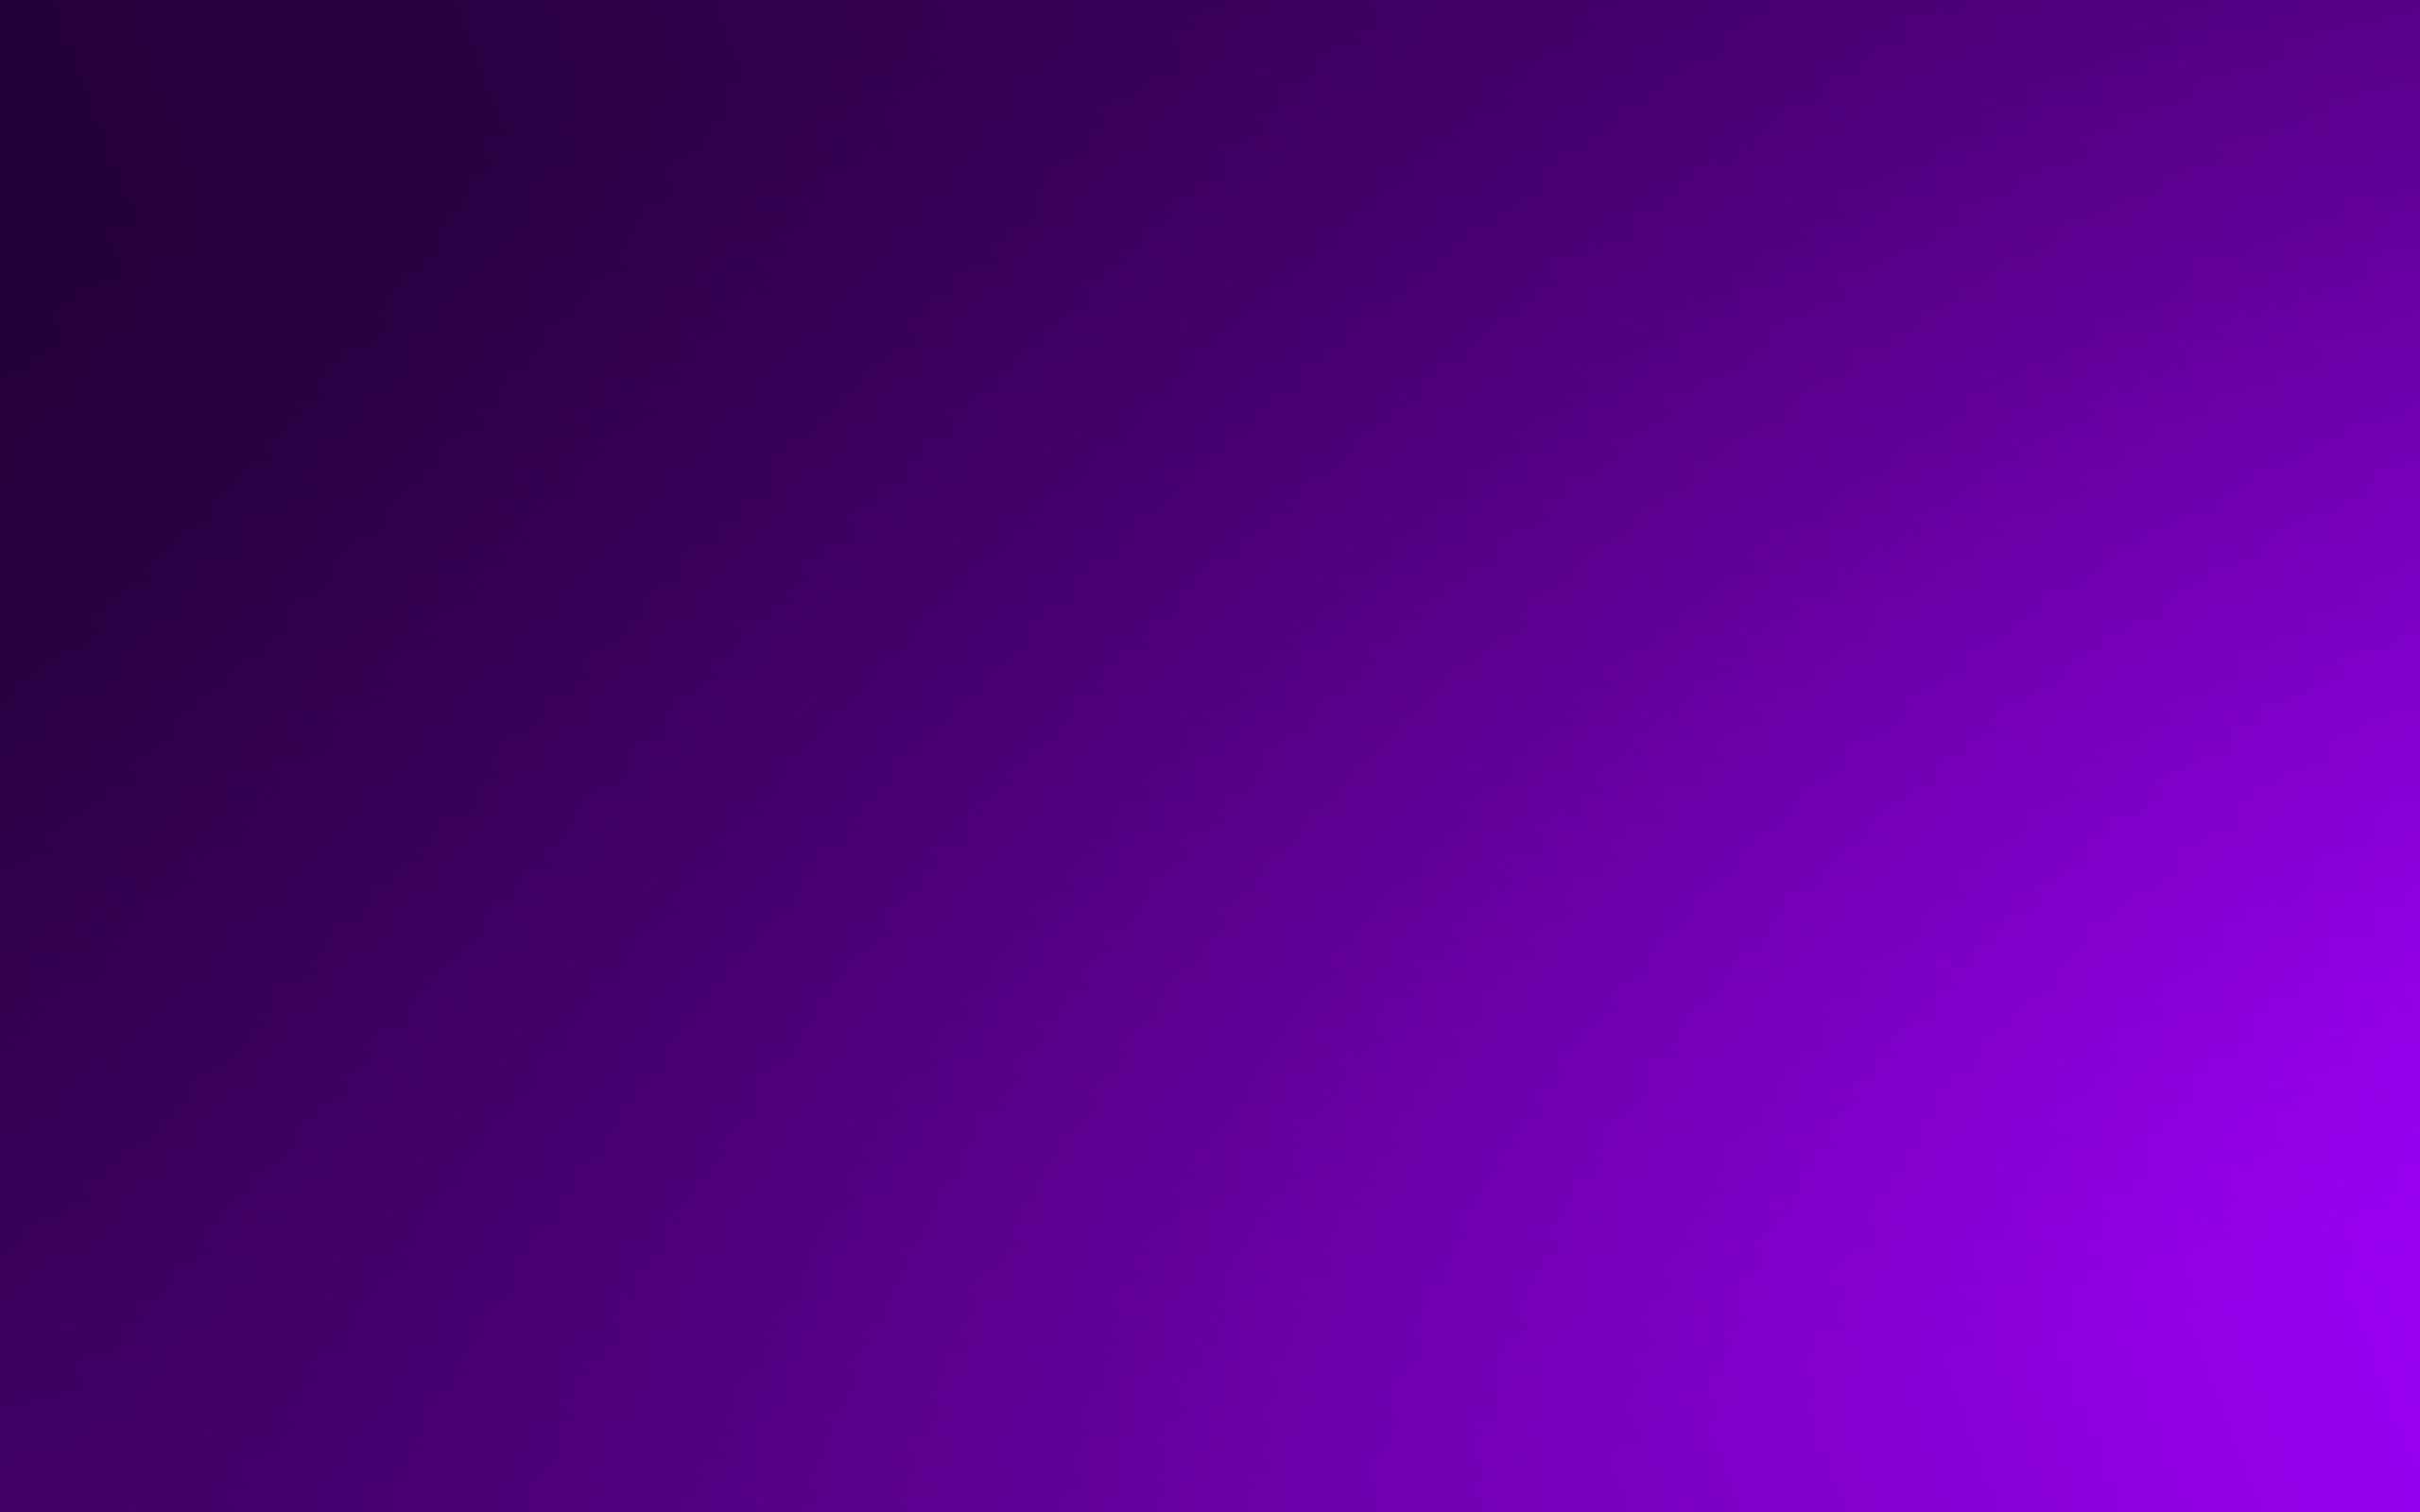 sk61-dark-purple-blur-gradation-wallpaper